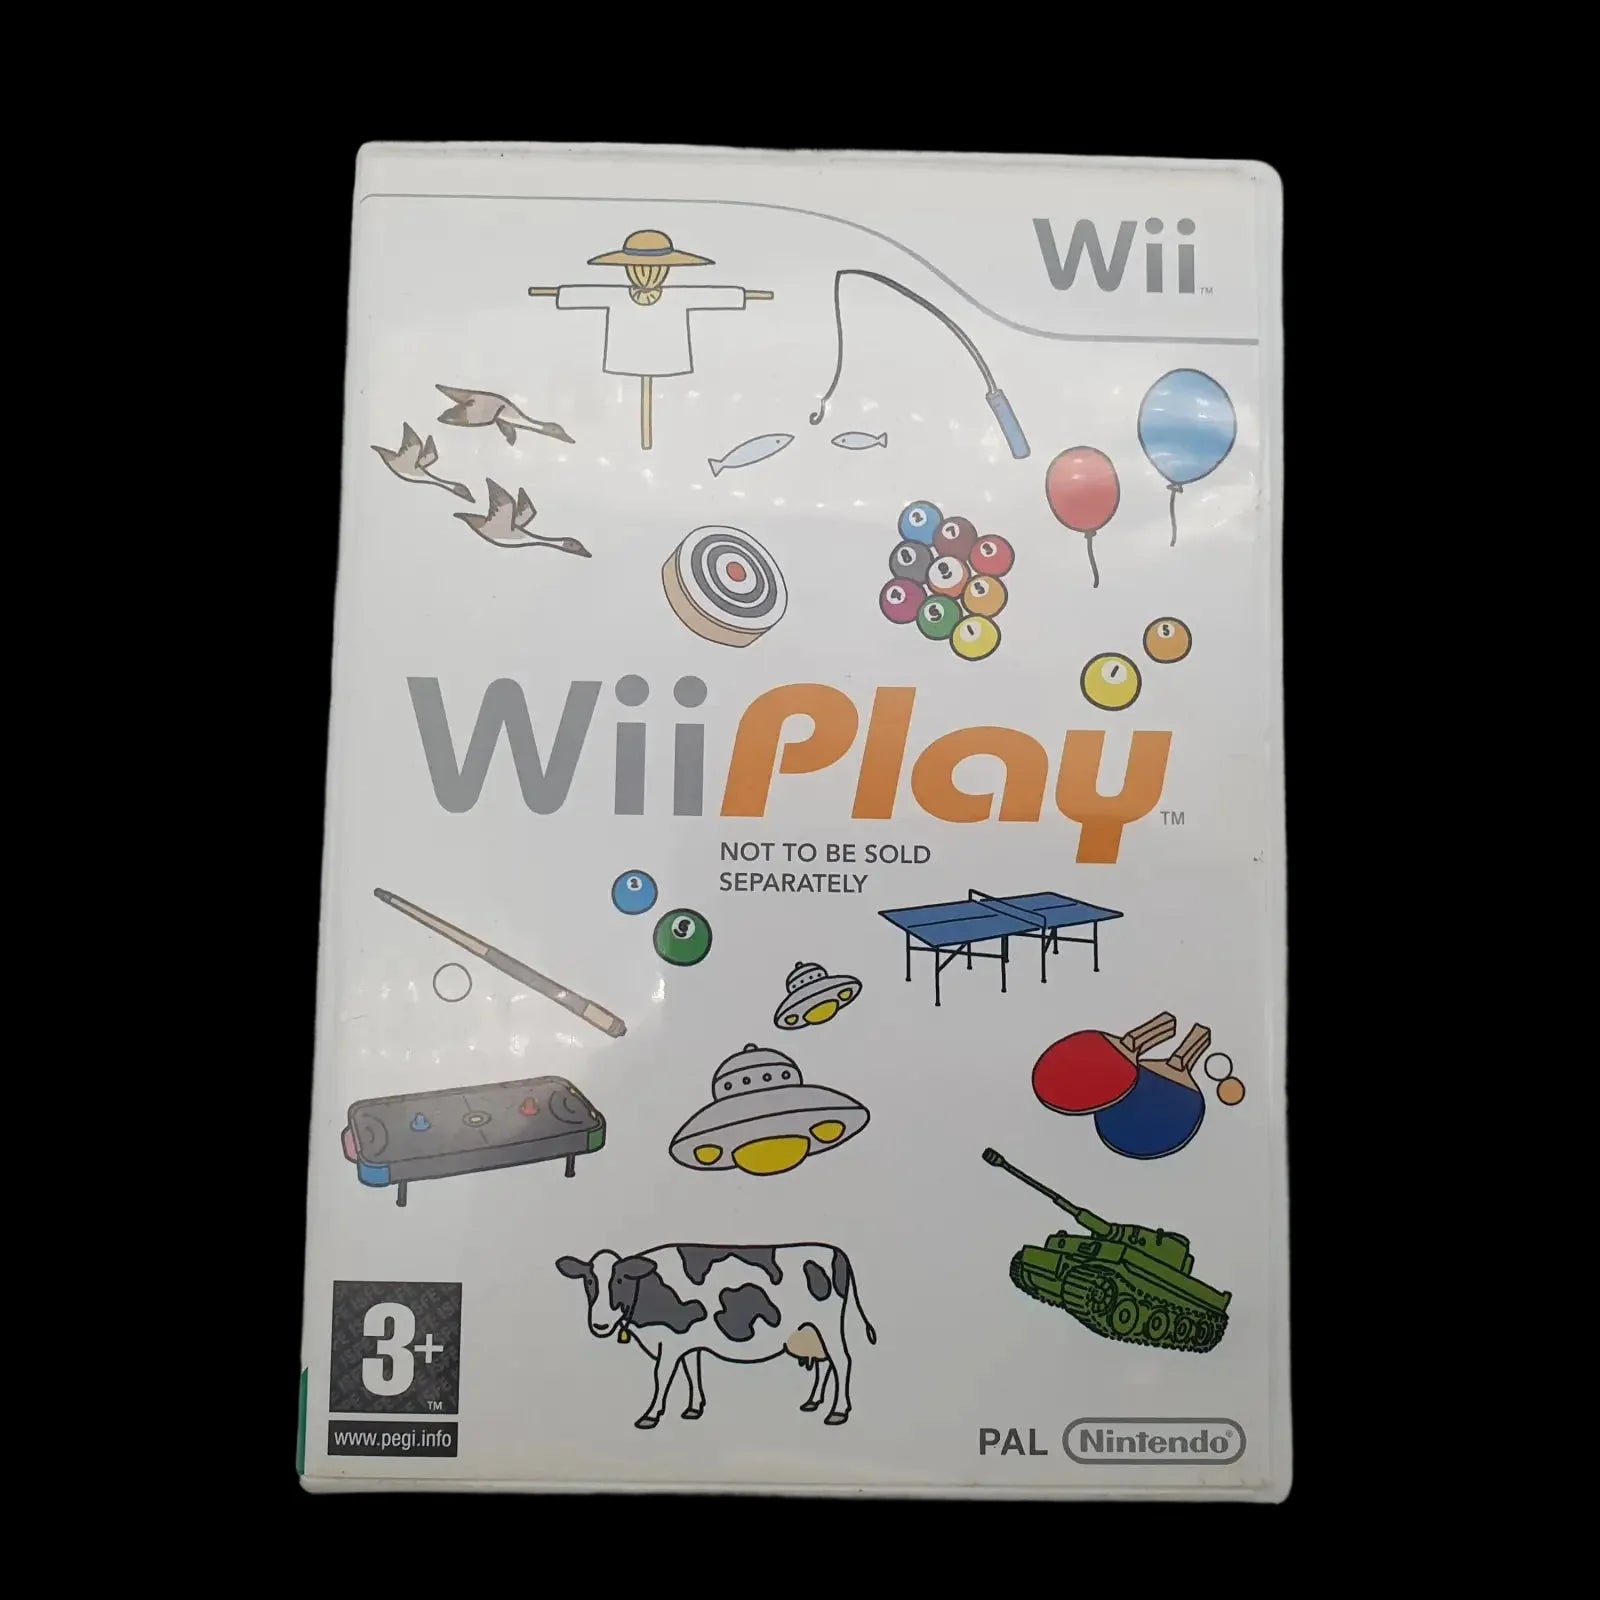 Wii Play Nintendo 2007 Video Game Cib - Games - 1 - 2397